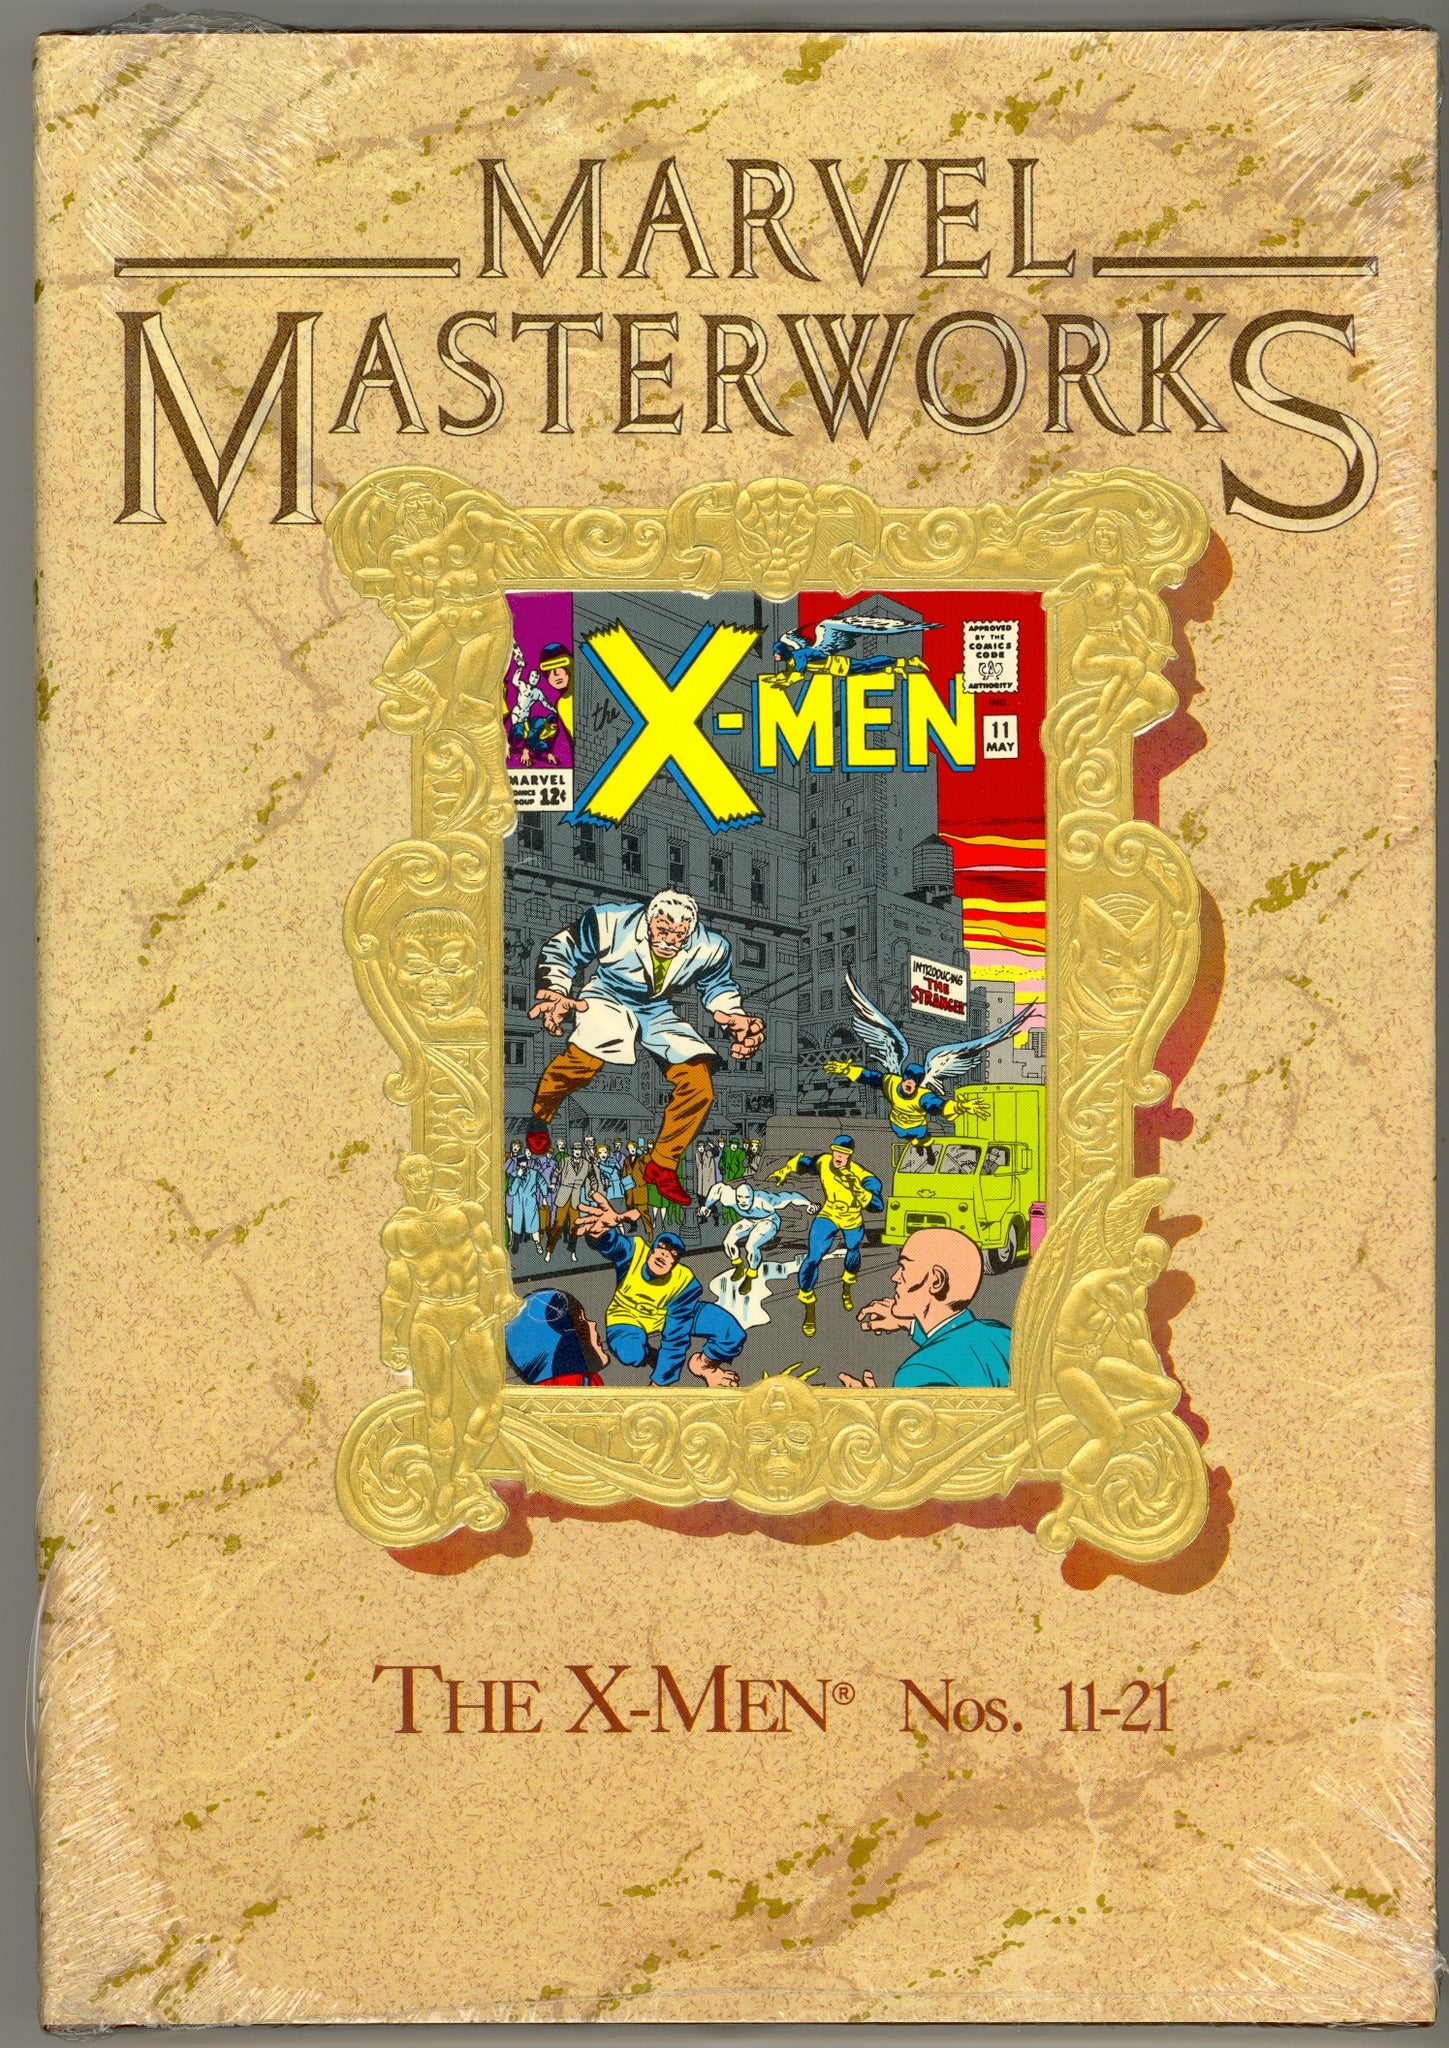 Marvel Masterworks volume 7 X-Men issues 11-21 - 1st printing